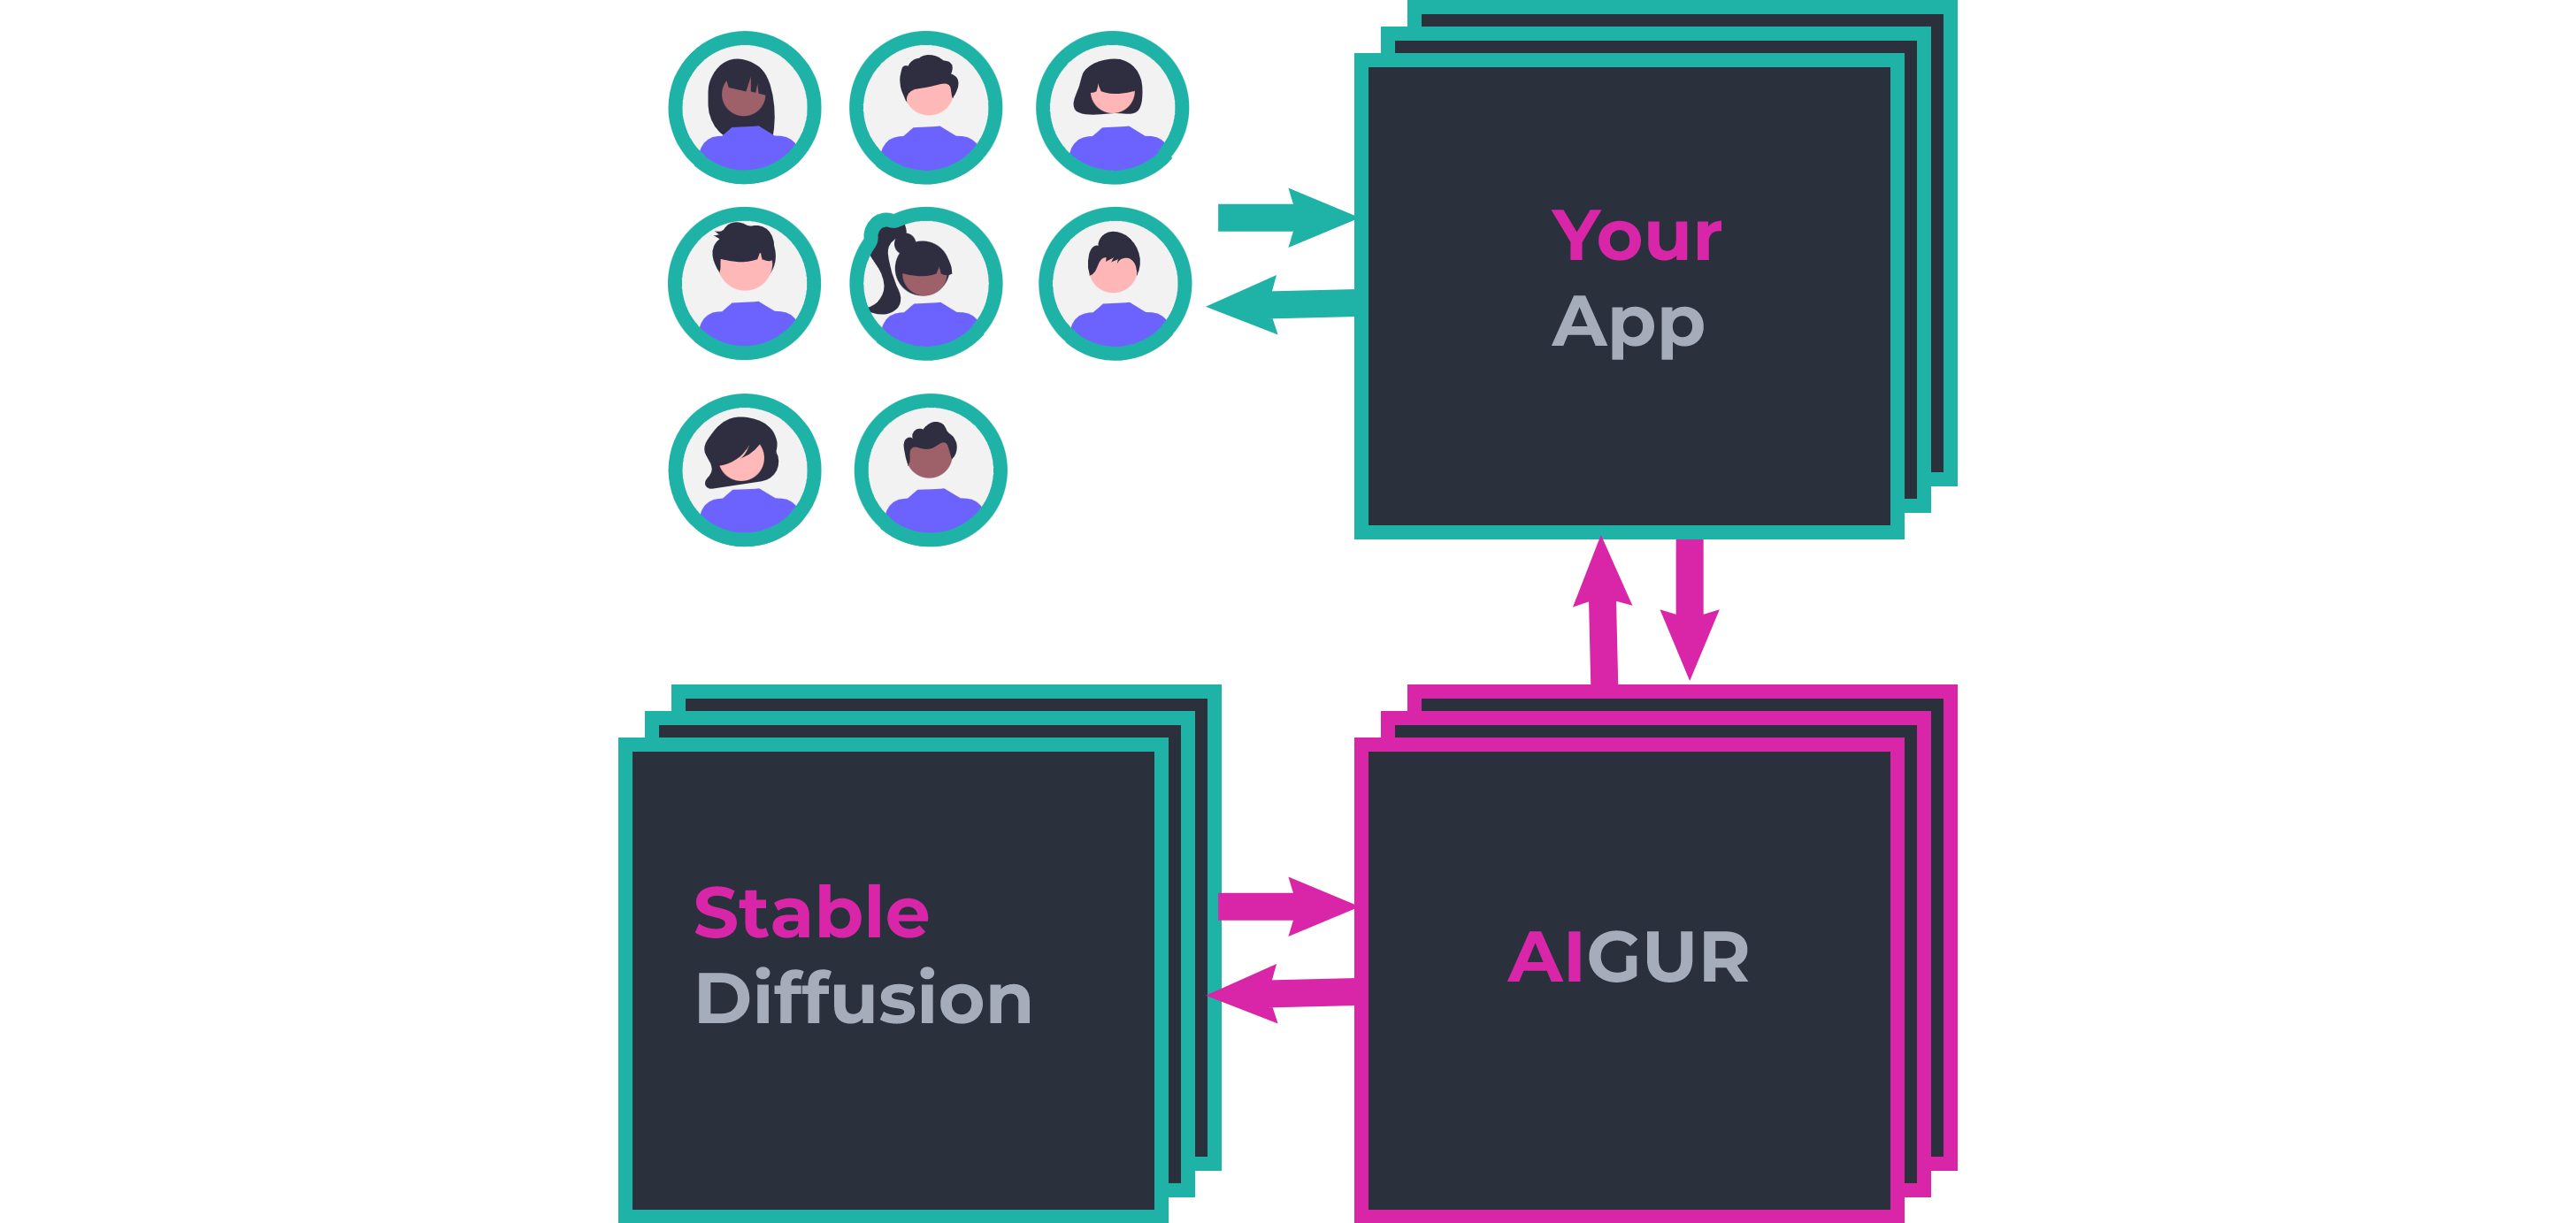 Aigur - Build multi-user Generative AI based applications